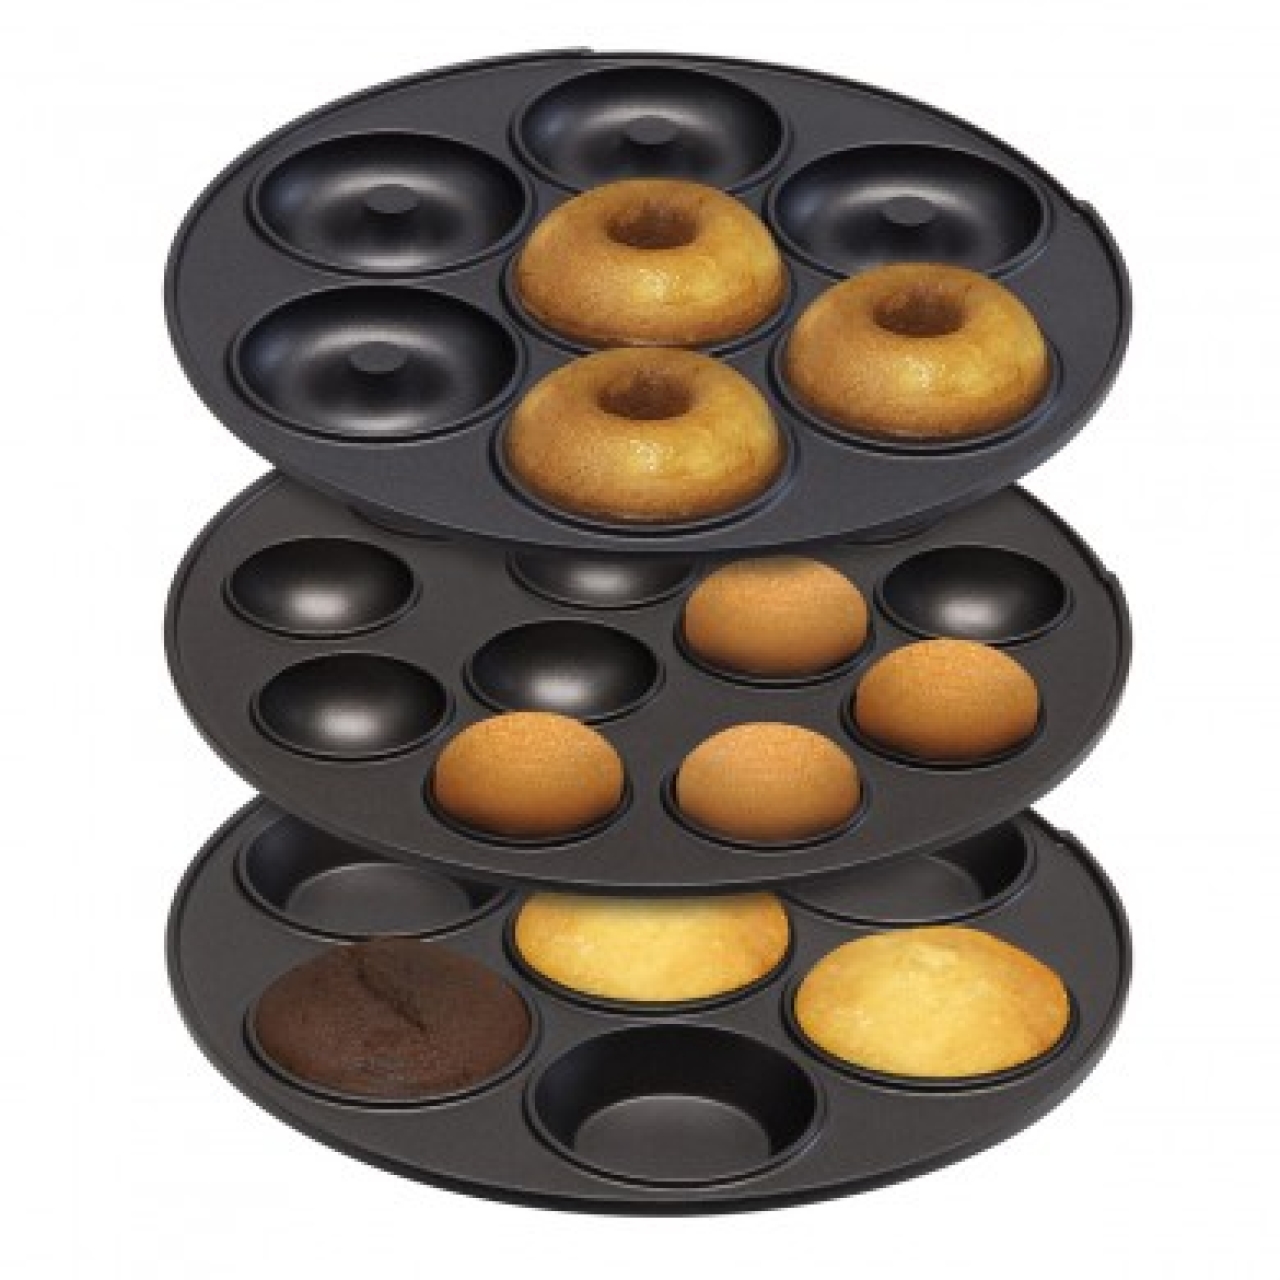 Bestron Cakepops, Donut & Cupcakes Maker, 3 in 1